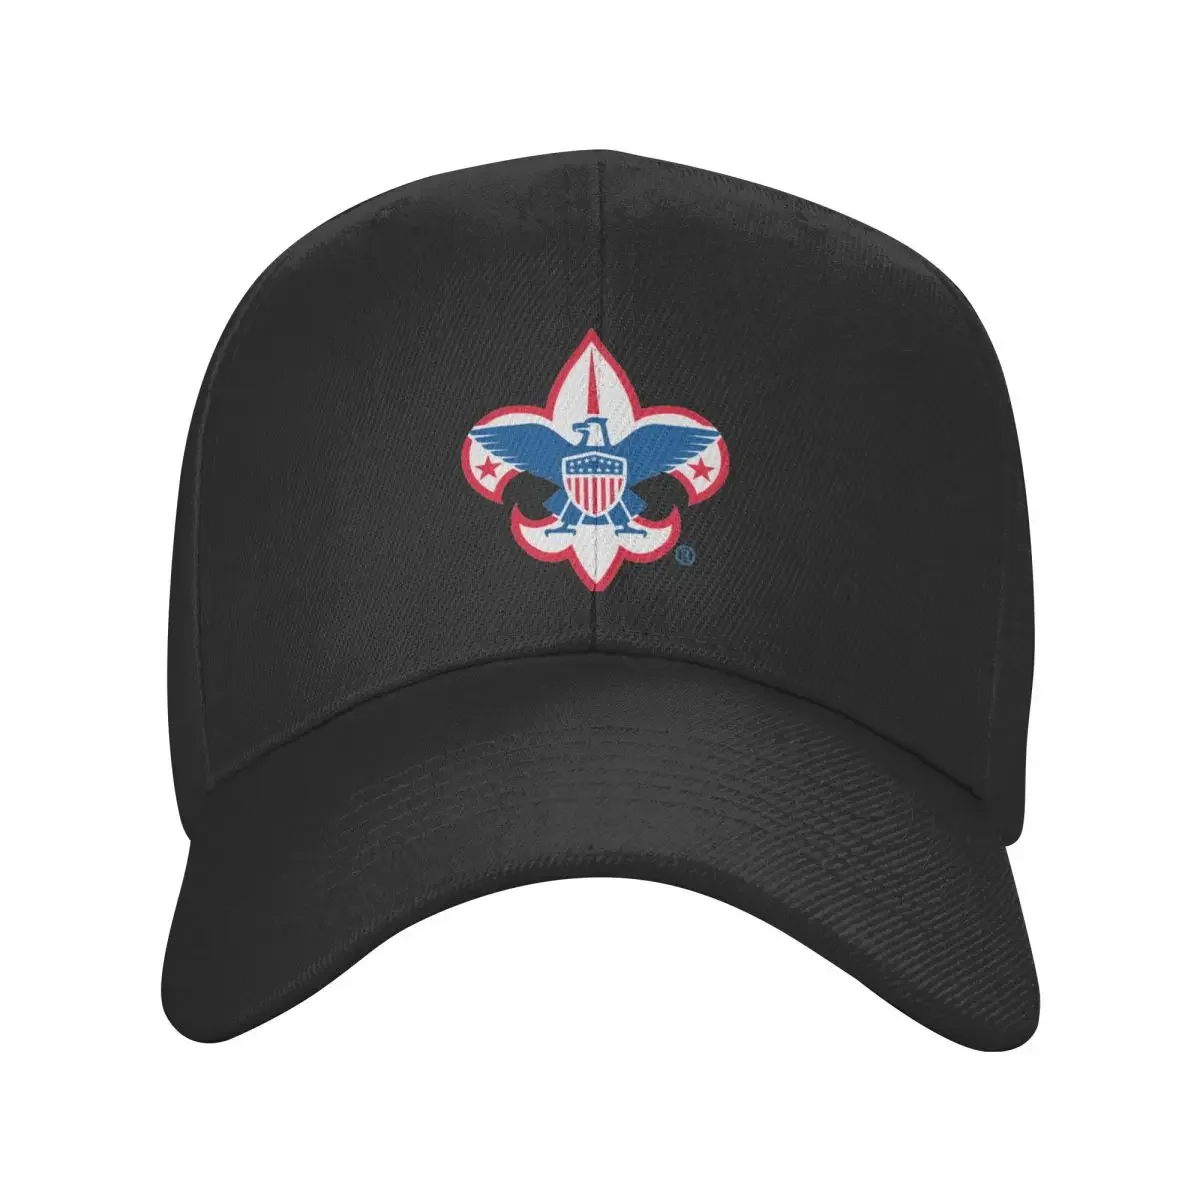 boy scout / eagle scout logo symbol Baseball Cap funny hat Golf Cap Fashion Beach cute Mens Women's